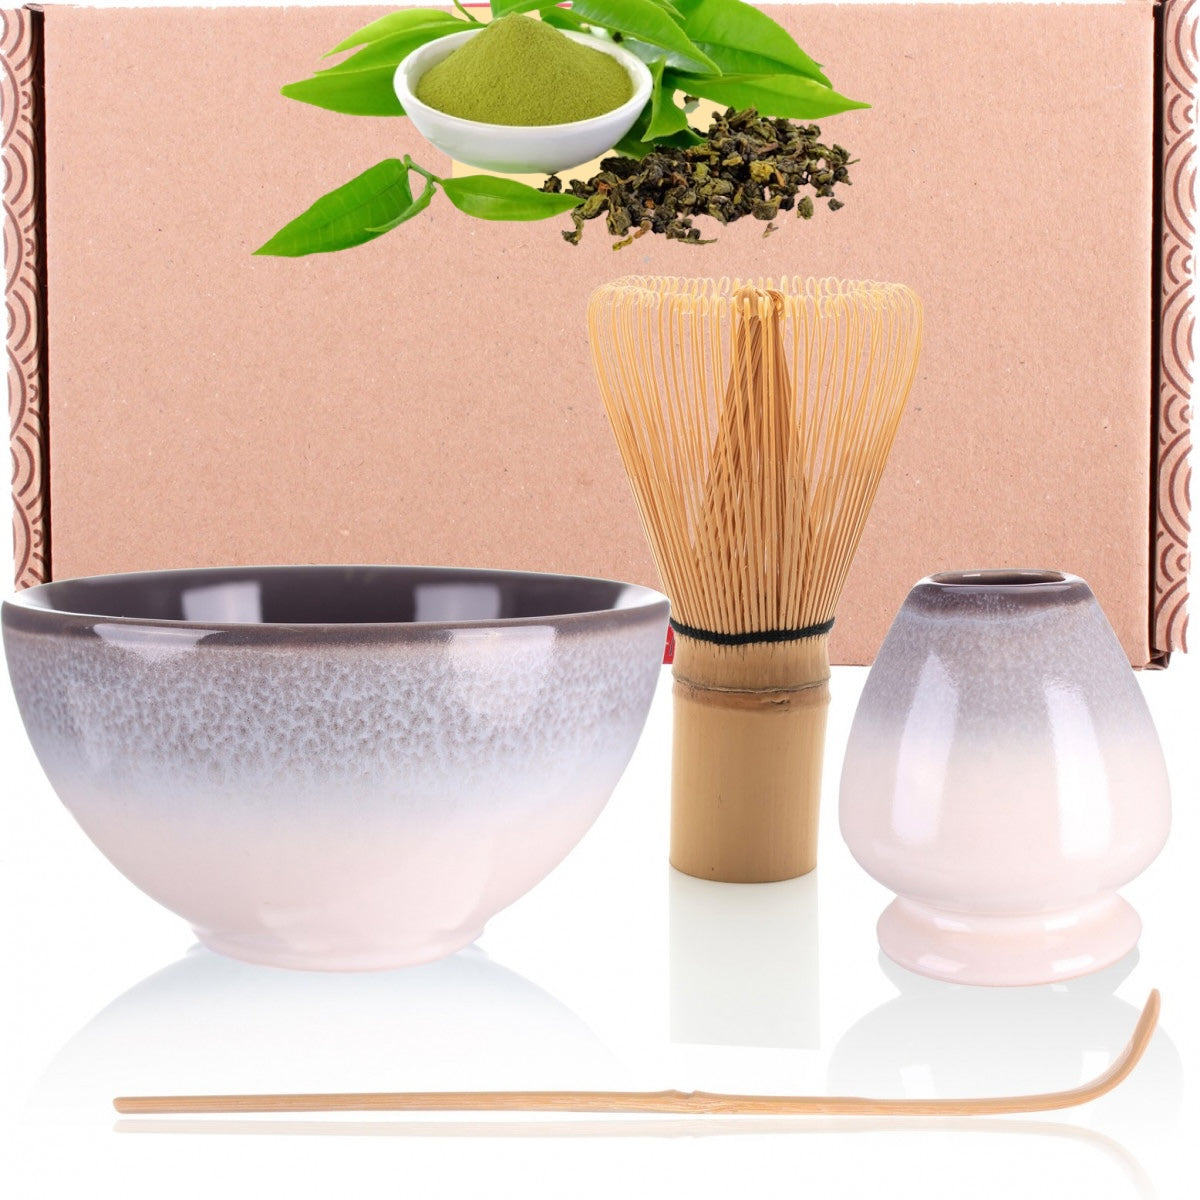 Matcha Green Tea Set - Kiri incl. broom